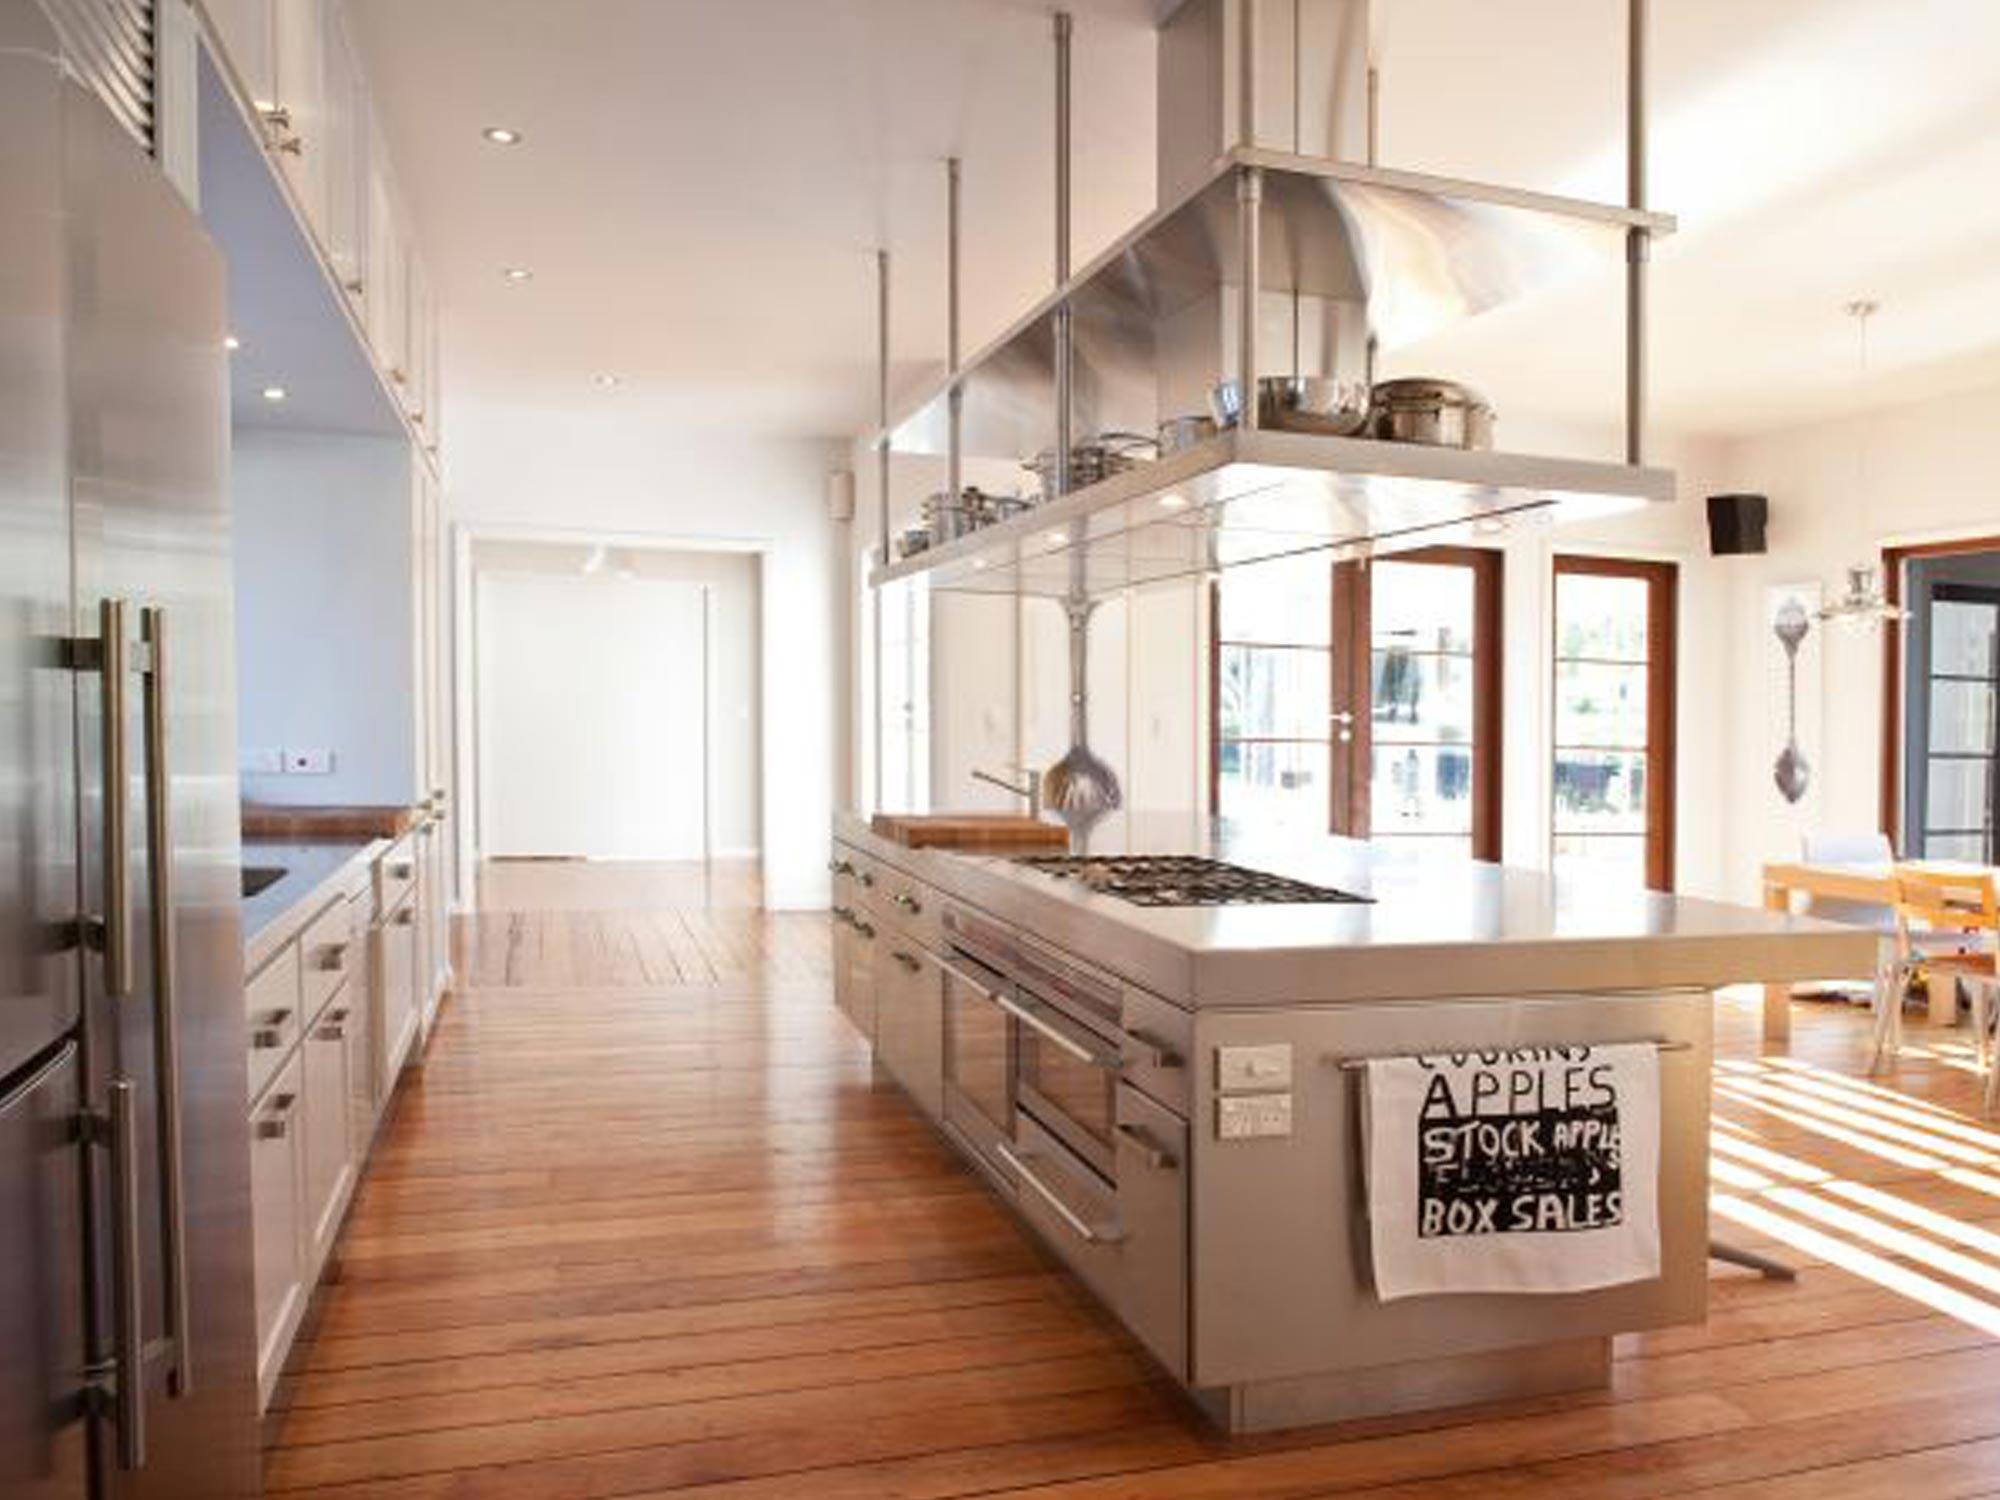 architectural range hoods domestic open kitchen